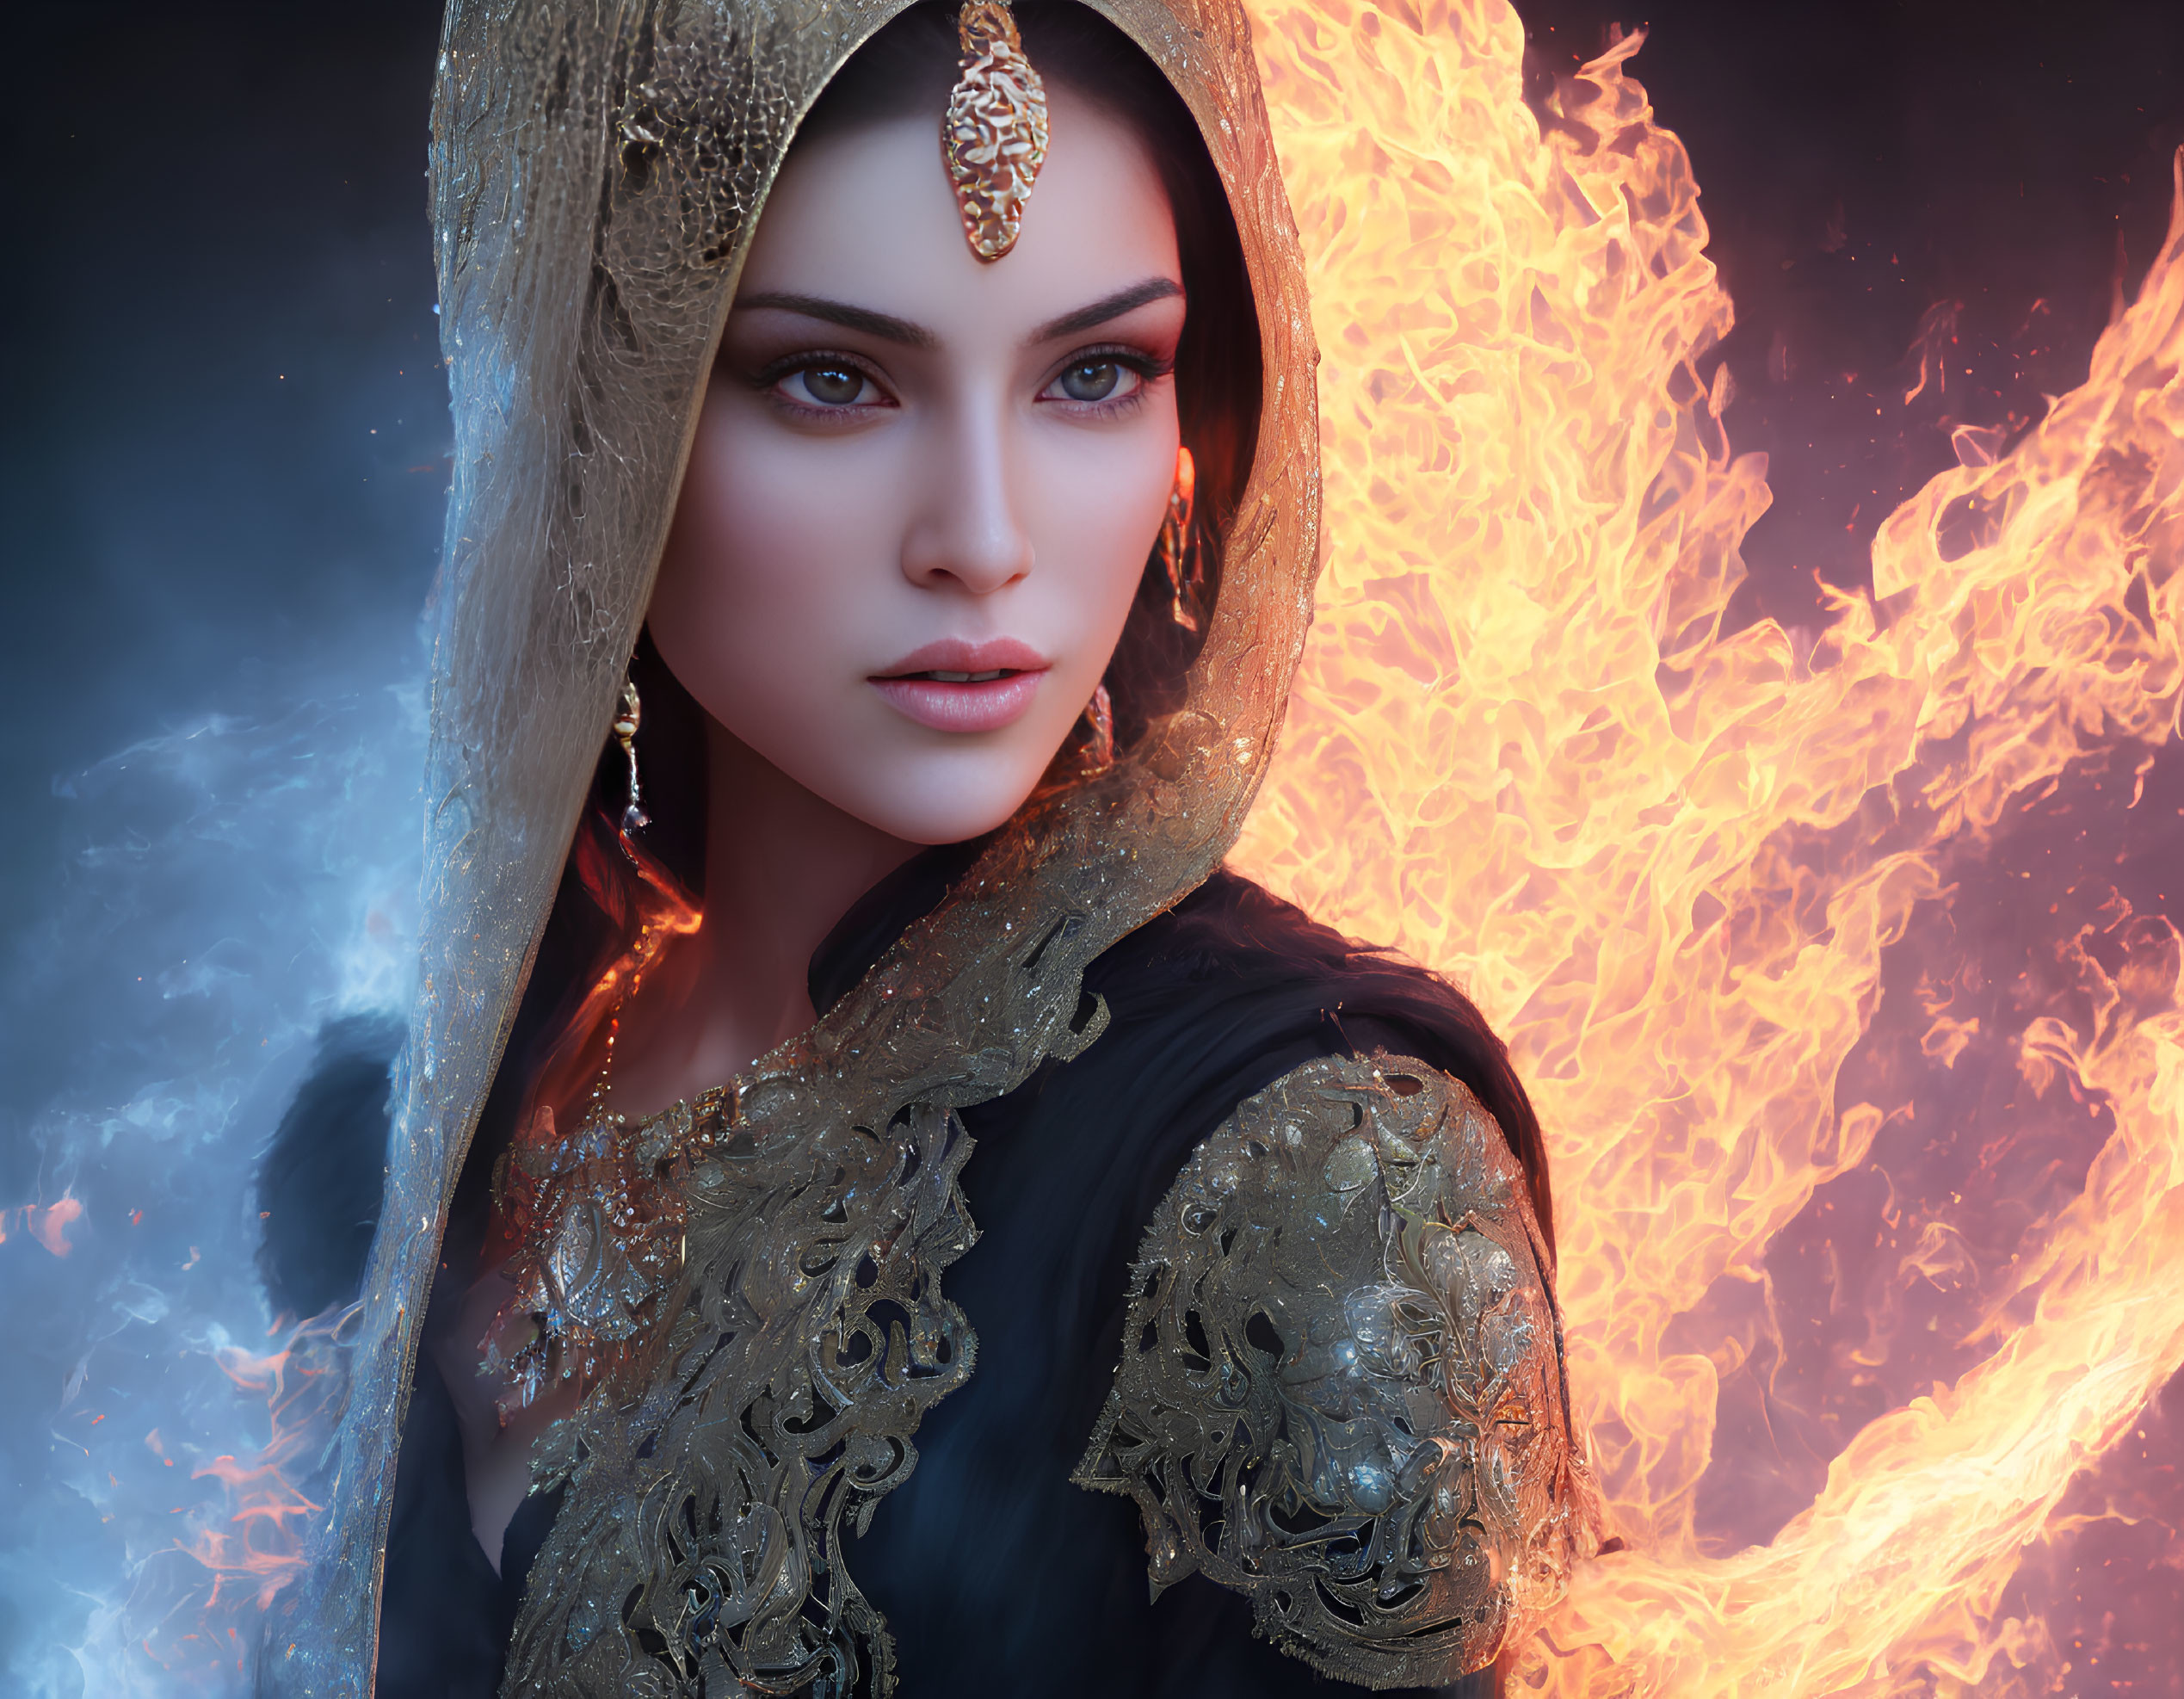 Digital Artwork: Woman with Dark Hair, Blue Eyes, Gold Jewelry, and Hooded Cloak